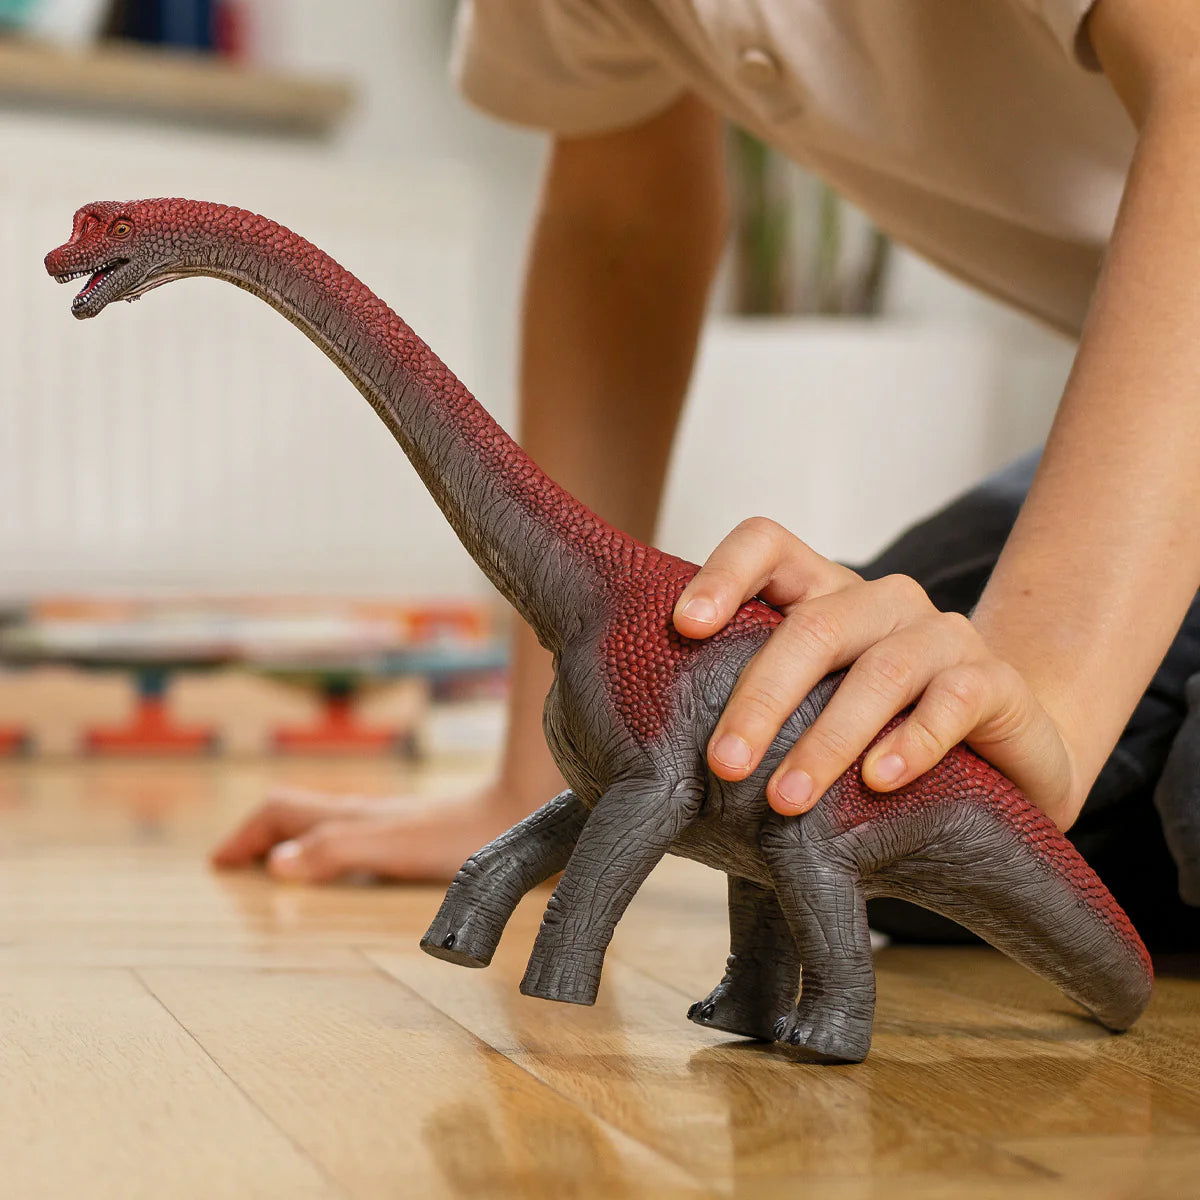 Brachiosaurus 11" Figure